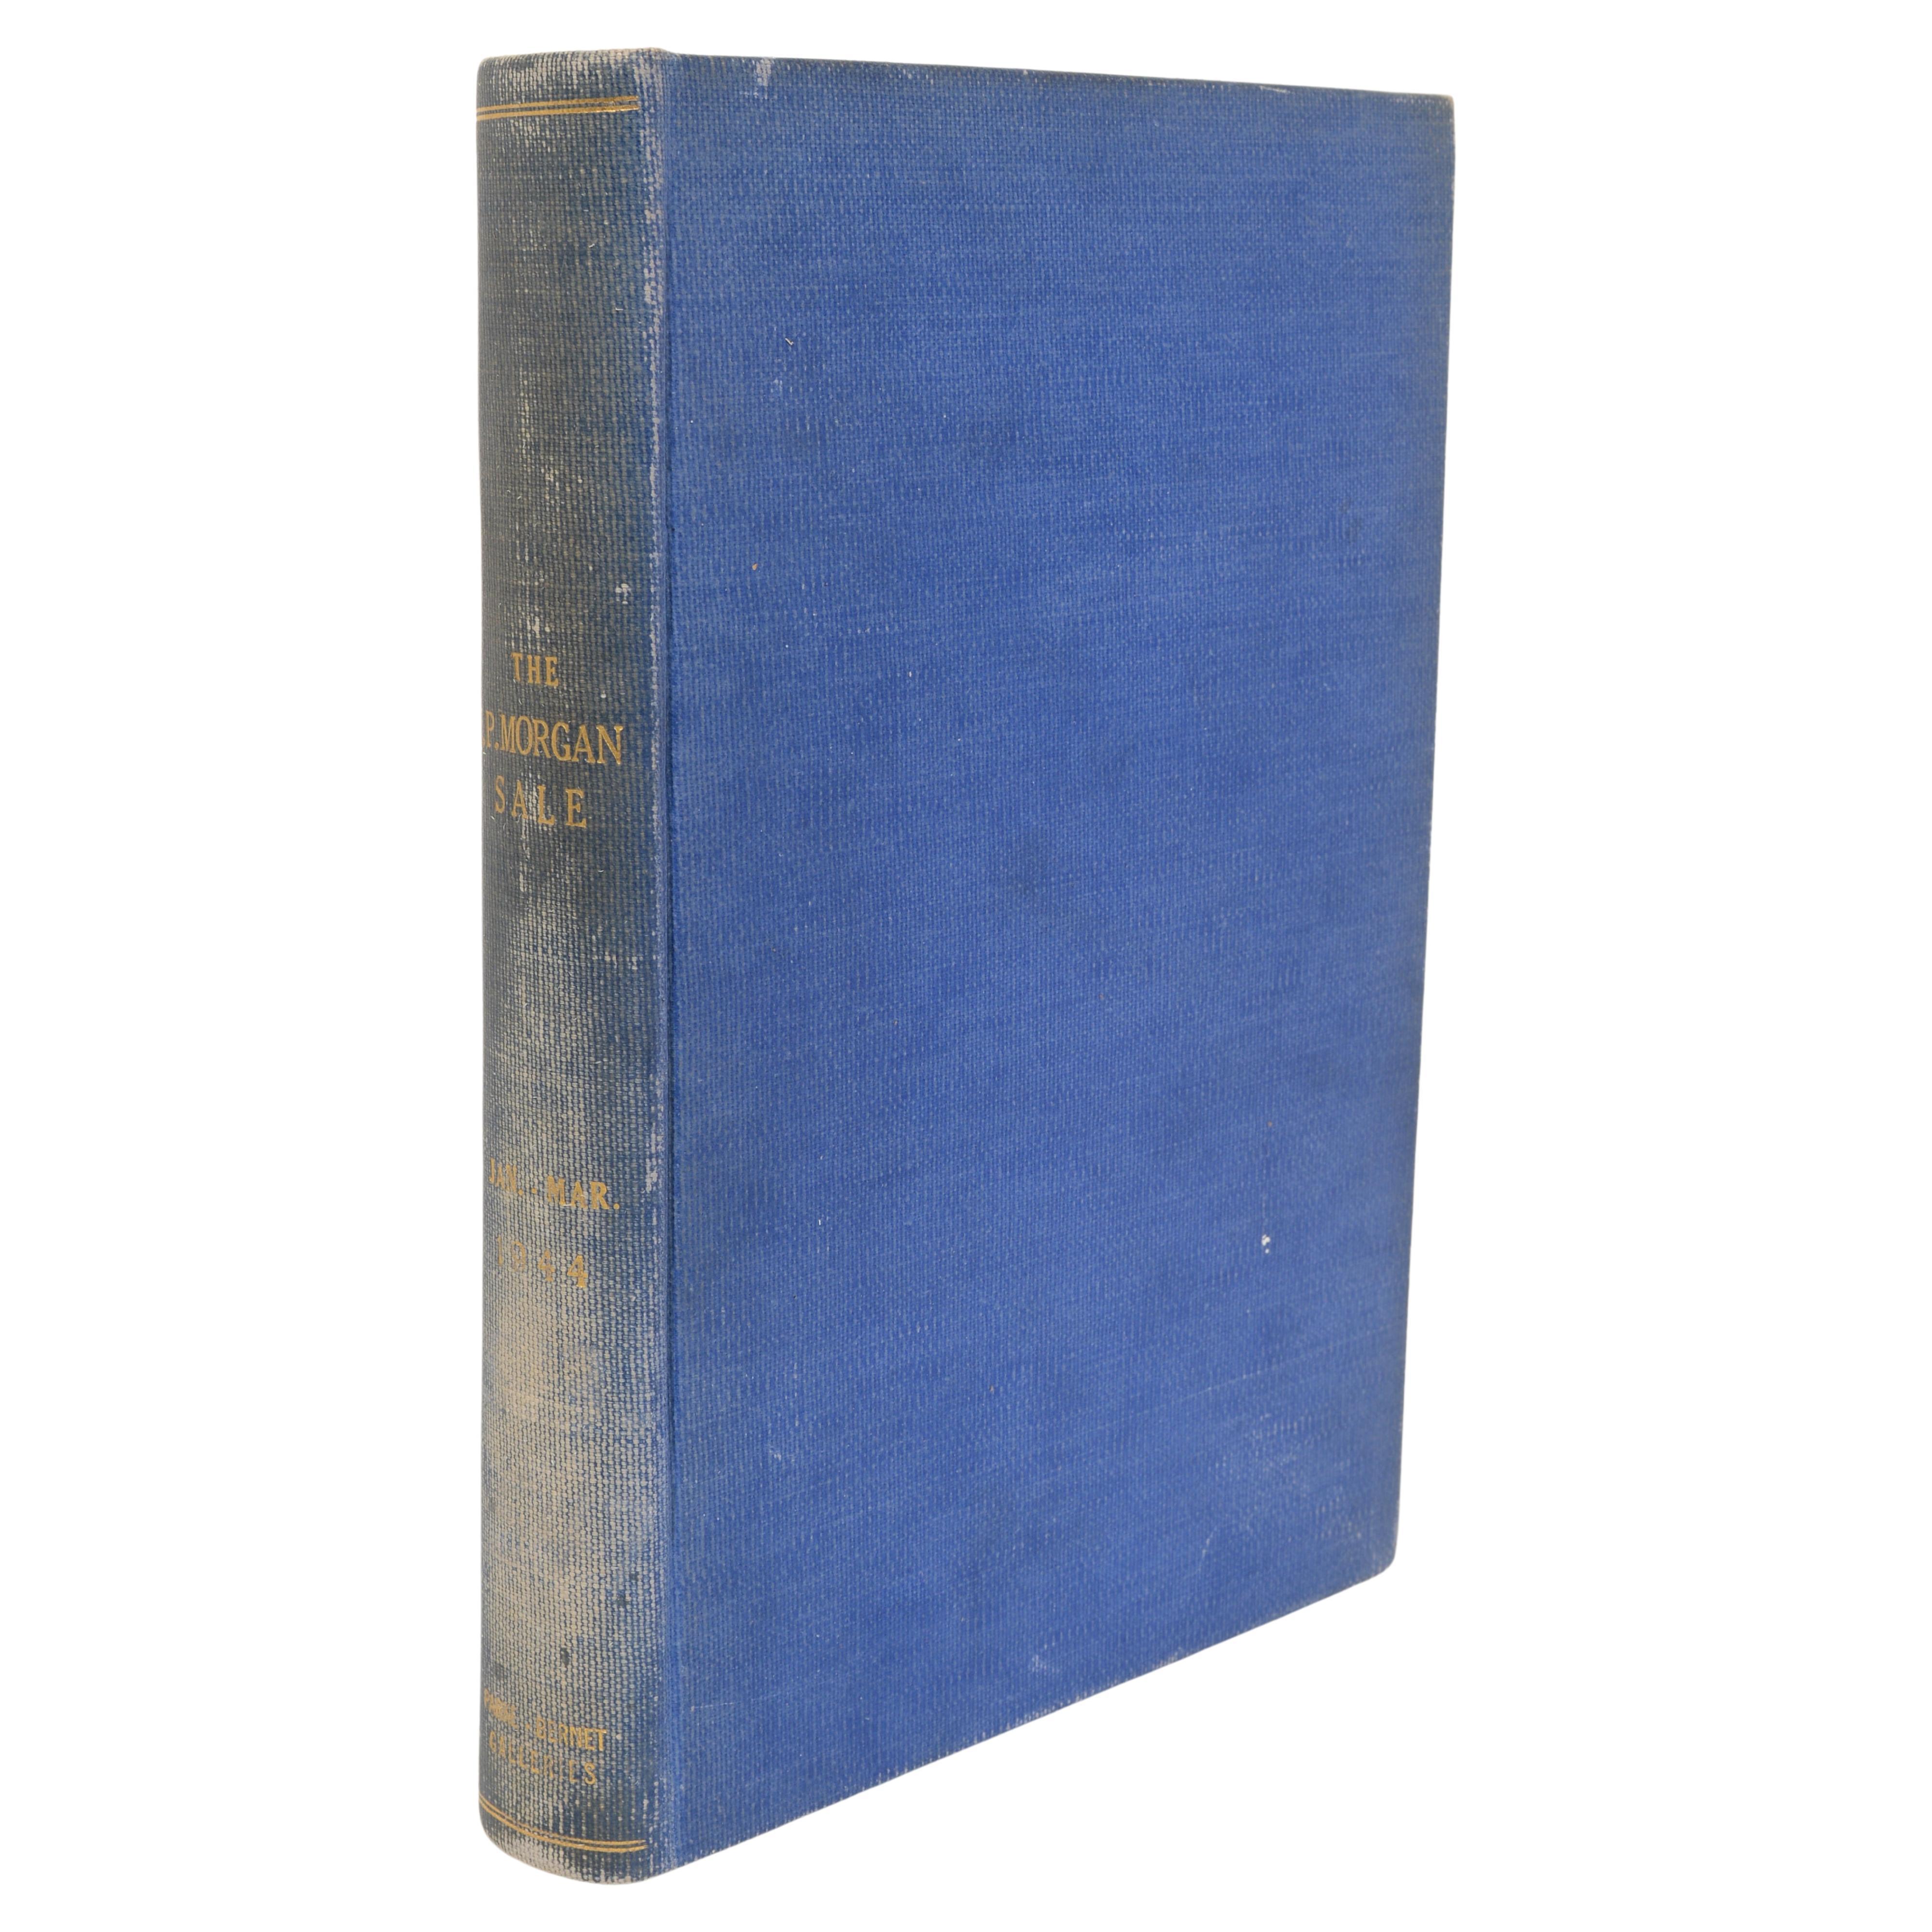 Propriétaire La succession de la fin de J.P. Morgan, ensemble complet de catalogues de 1944